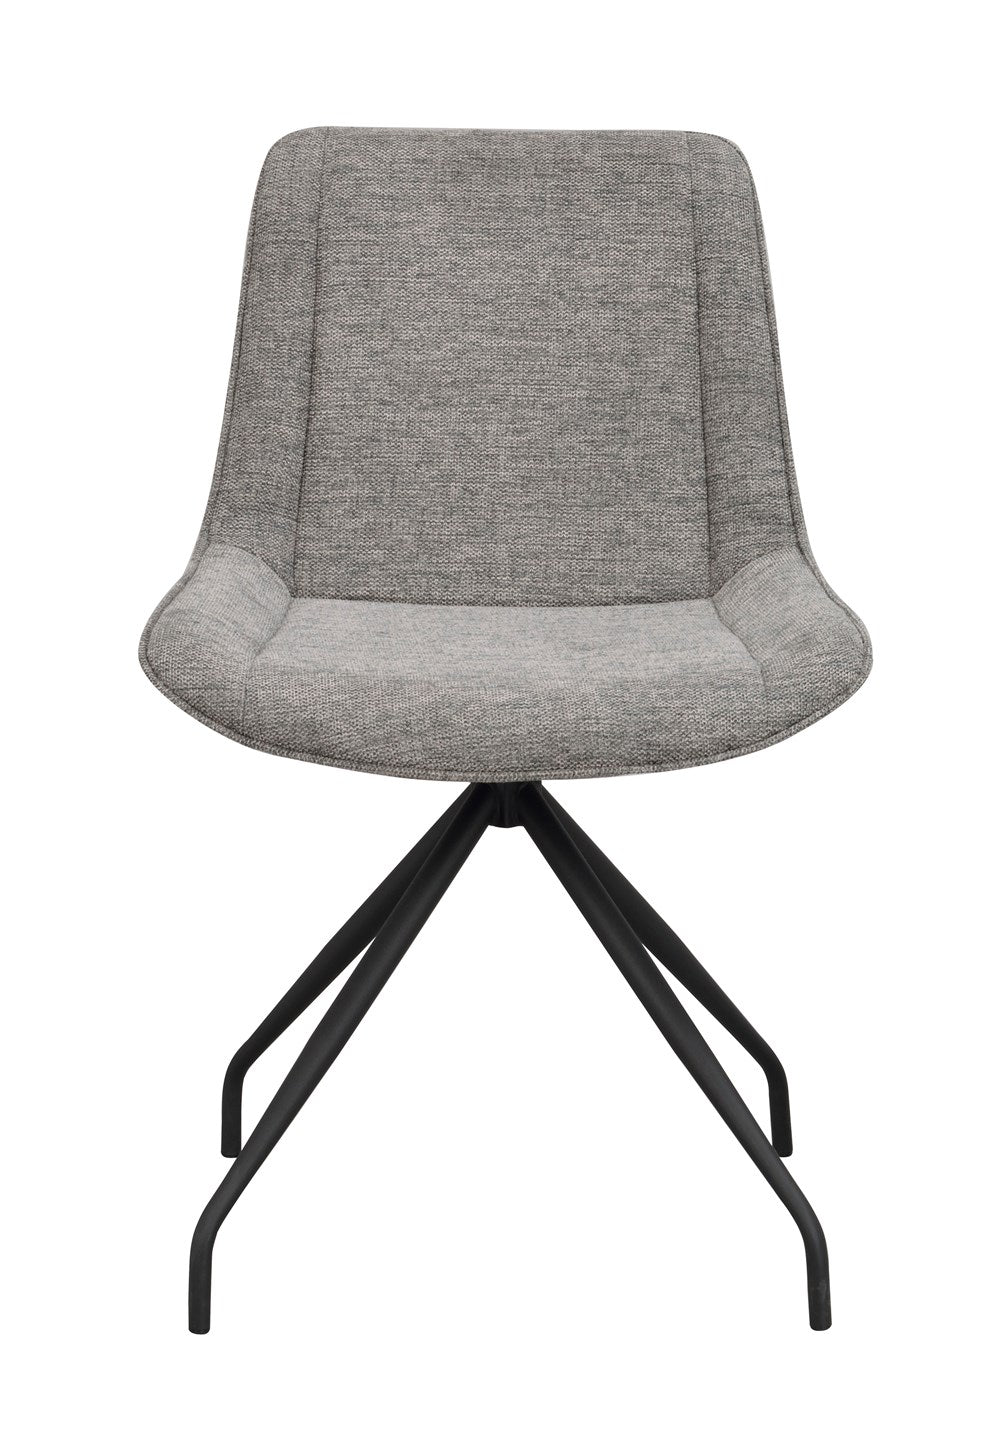 120084_a-rossport-chair-grey-fabric_black